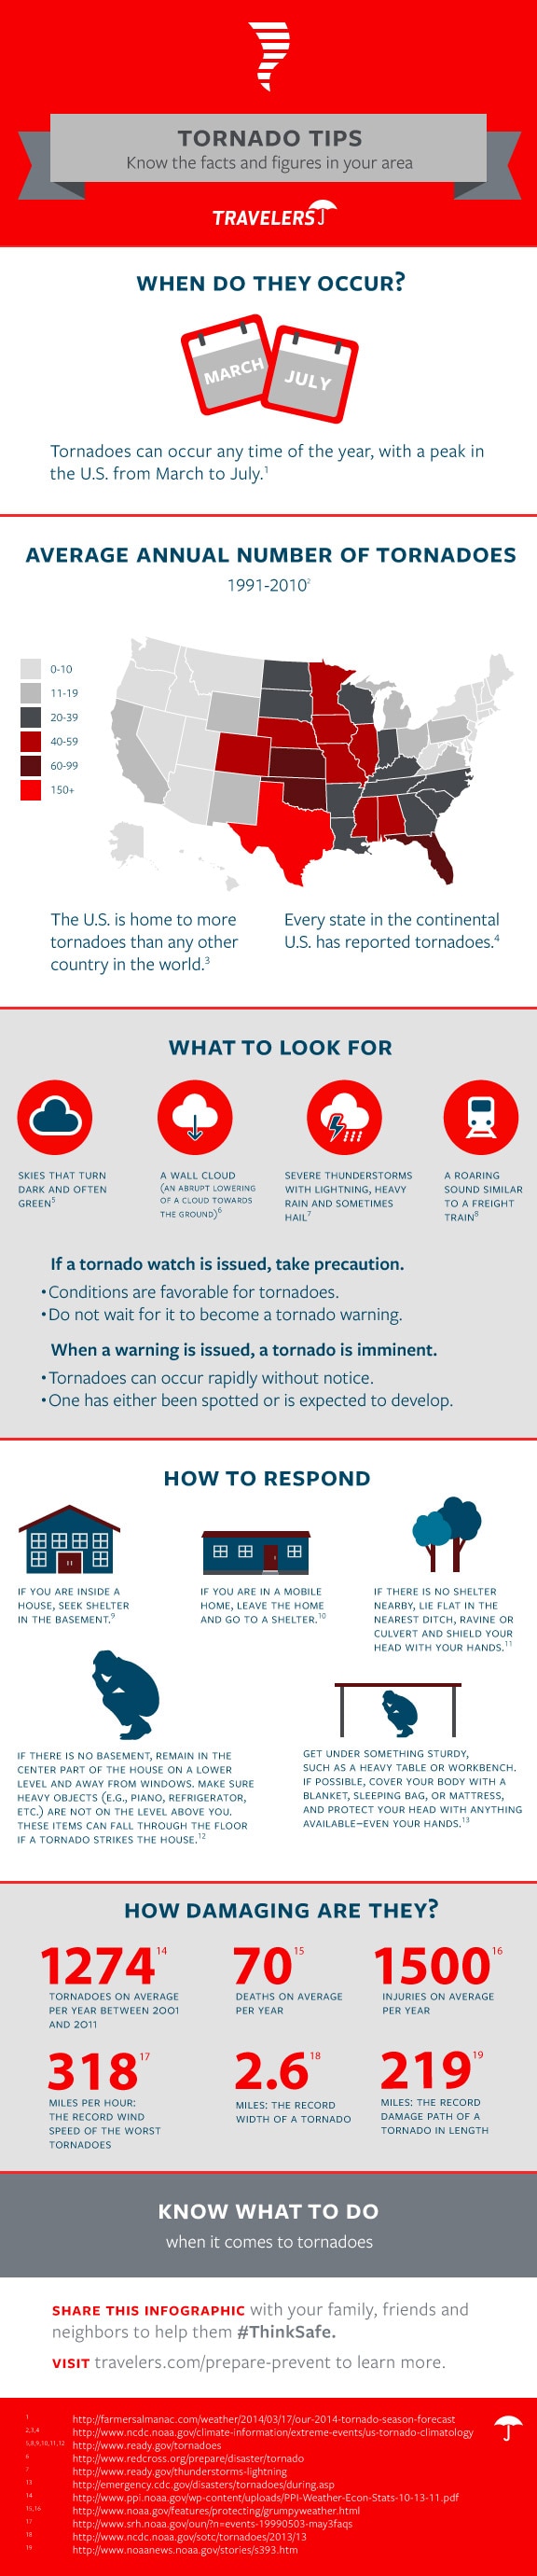 Tornado safety infographic